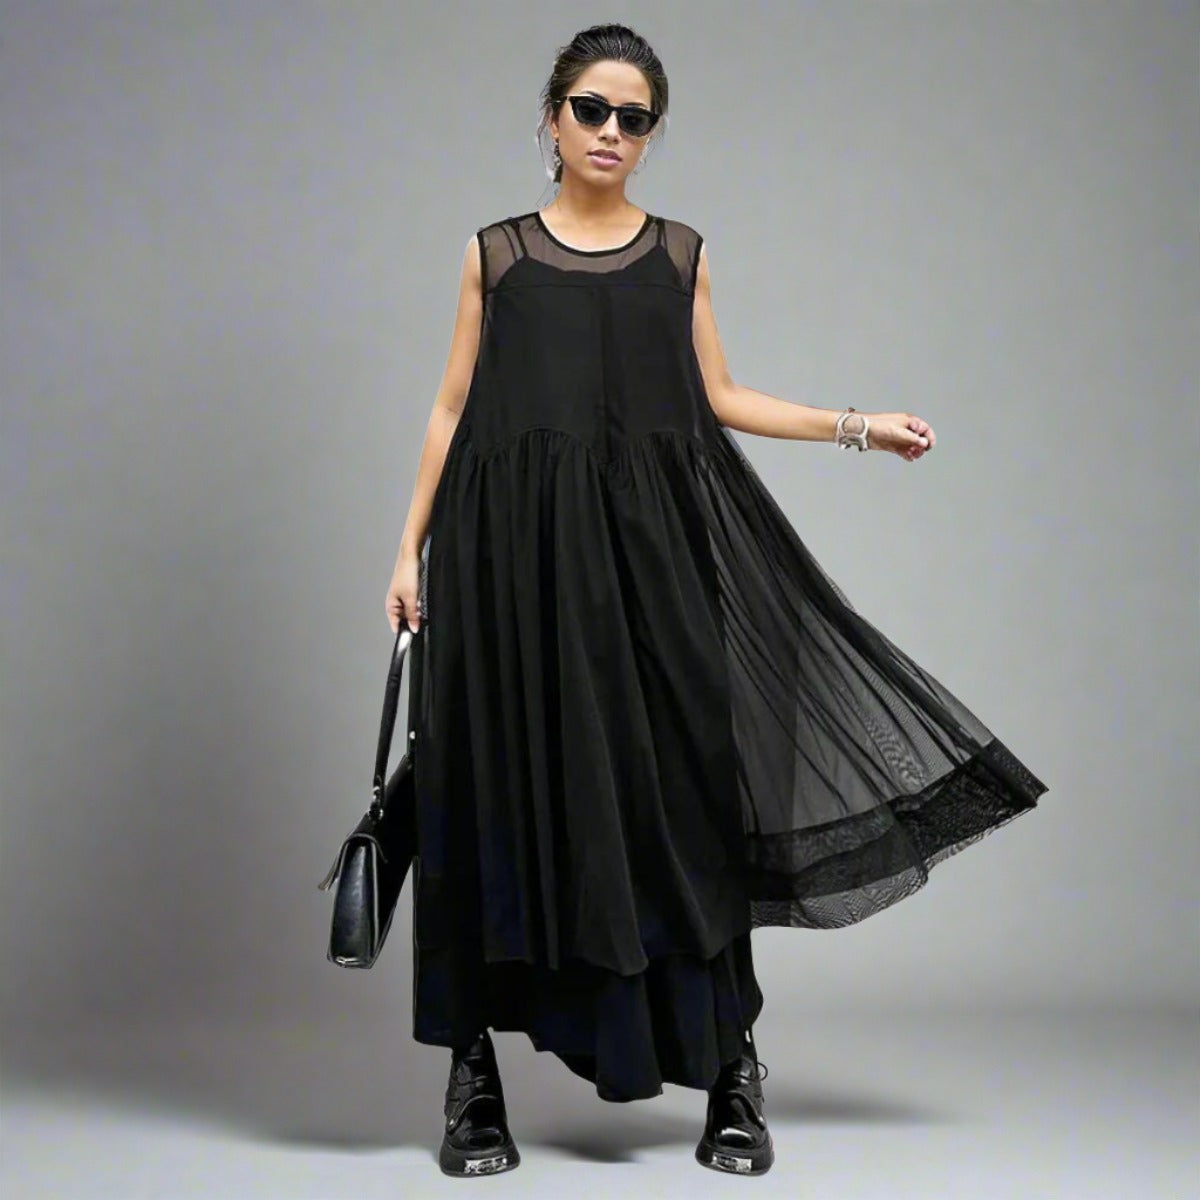 Elegant Black Chiffon Overlay Dress with Asymmetrical Hem and Sheer Mesh Design-SimpleModerne